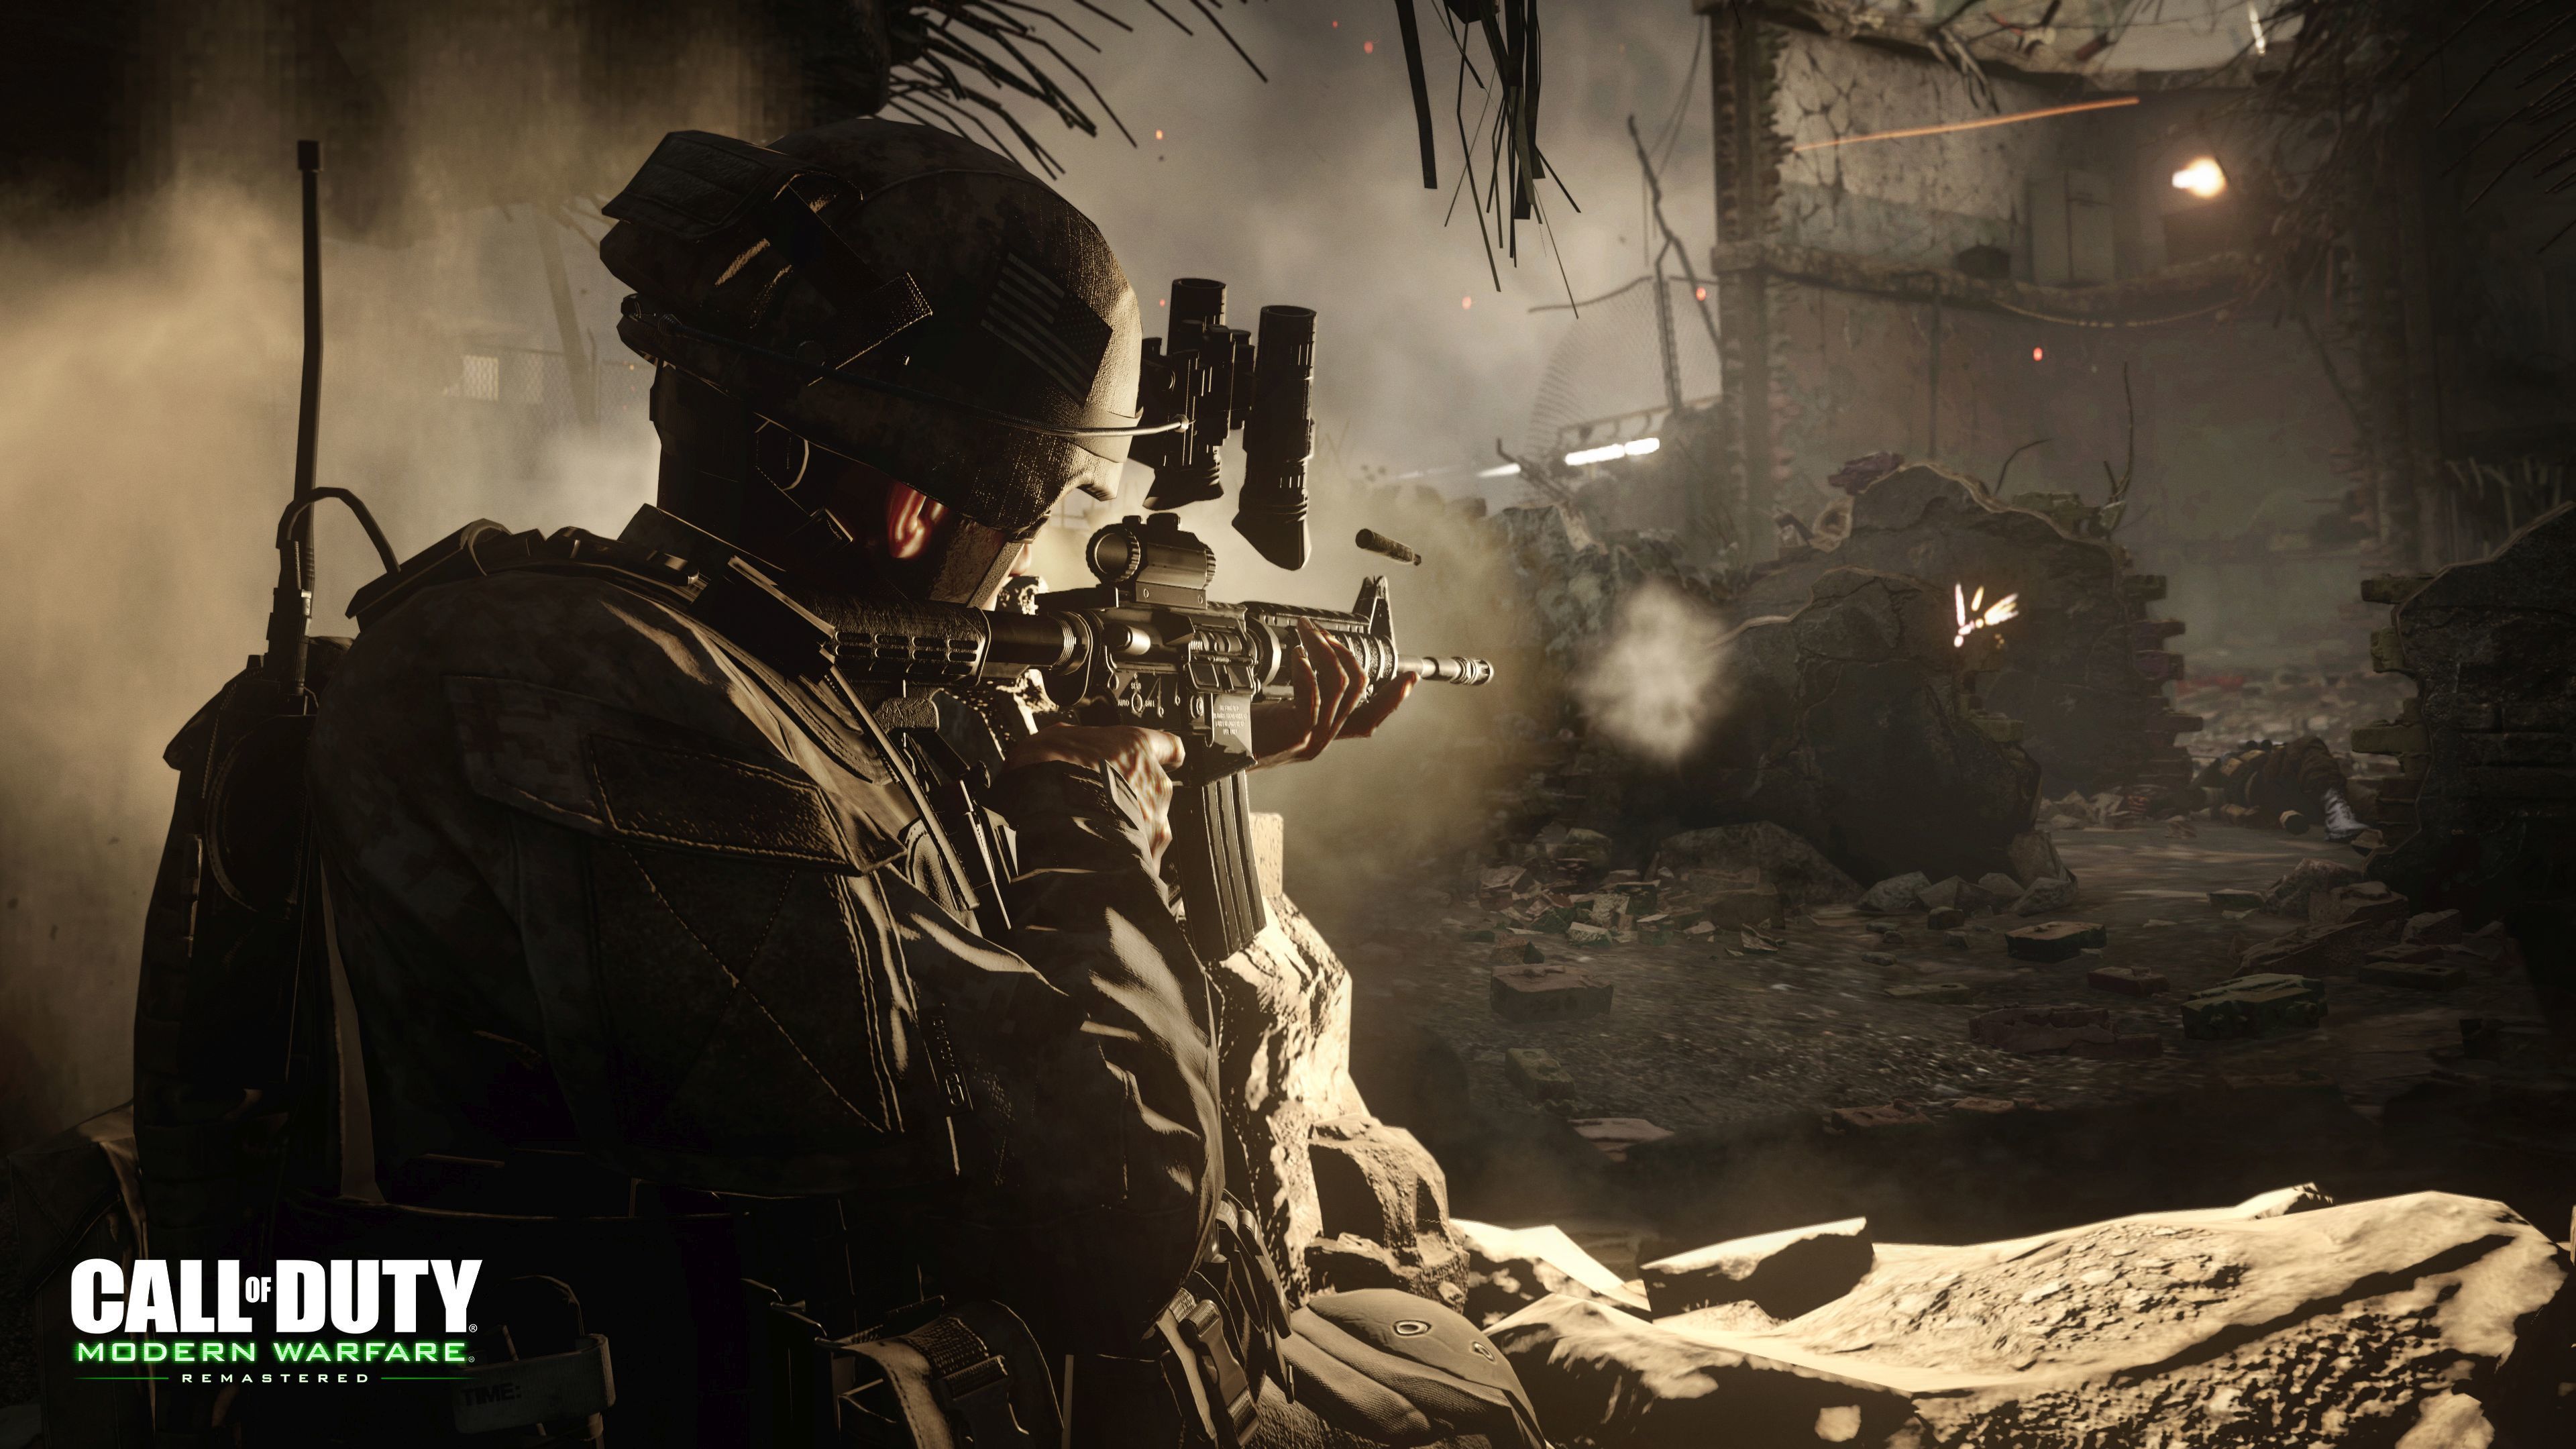 Call of Duty: Modern Warfare - Remastered (2016) download RePack by R.G. Mechanics | Paku Download